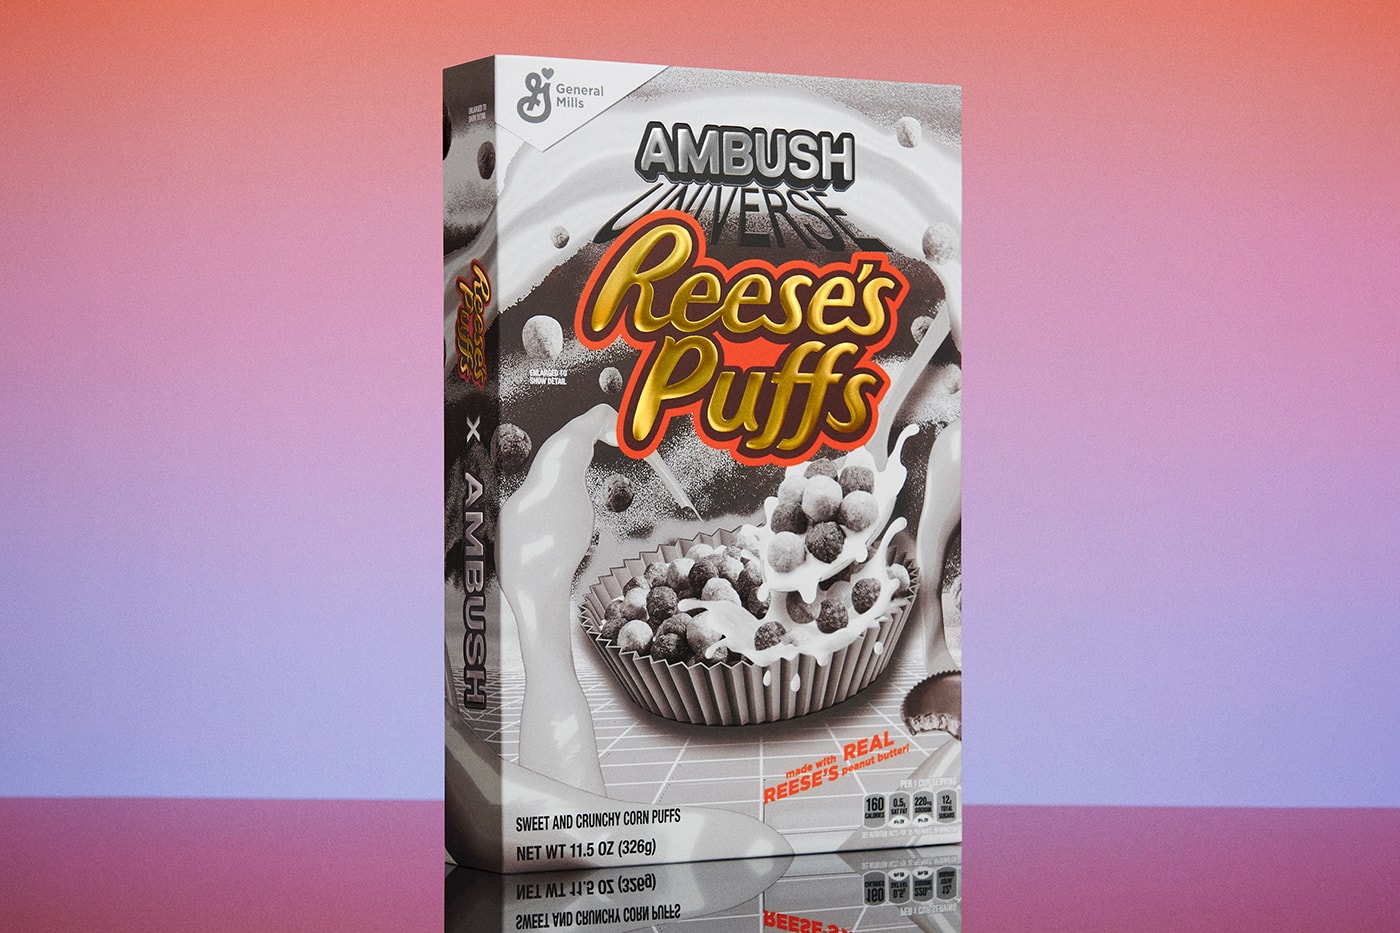 AMBUSH Reese's Puffs Breakfastverse Chrome Puff Cereal Box Release Info Date Buy Price Yoon Ahn General Mills